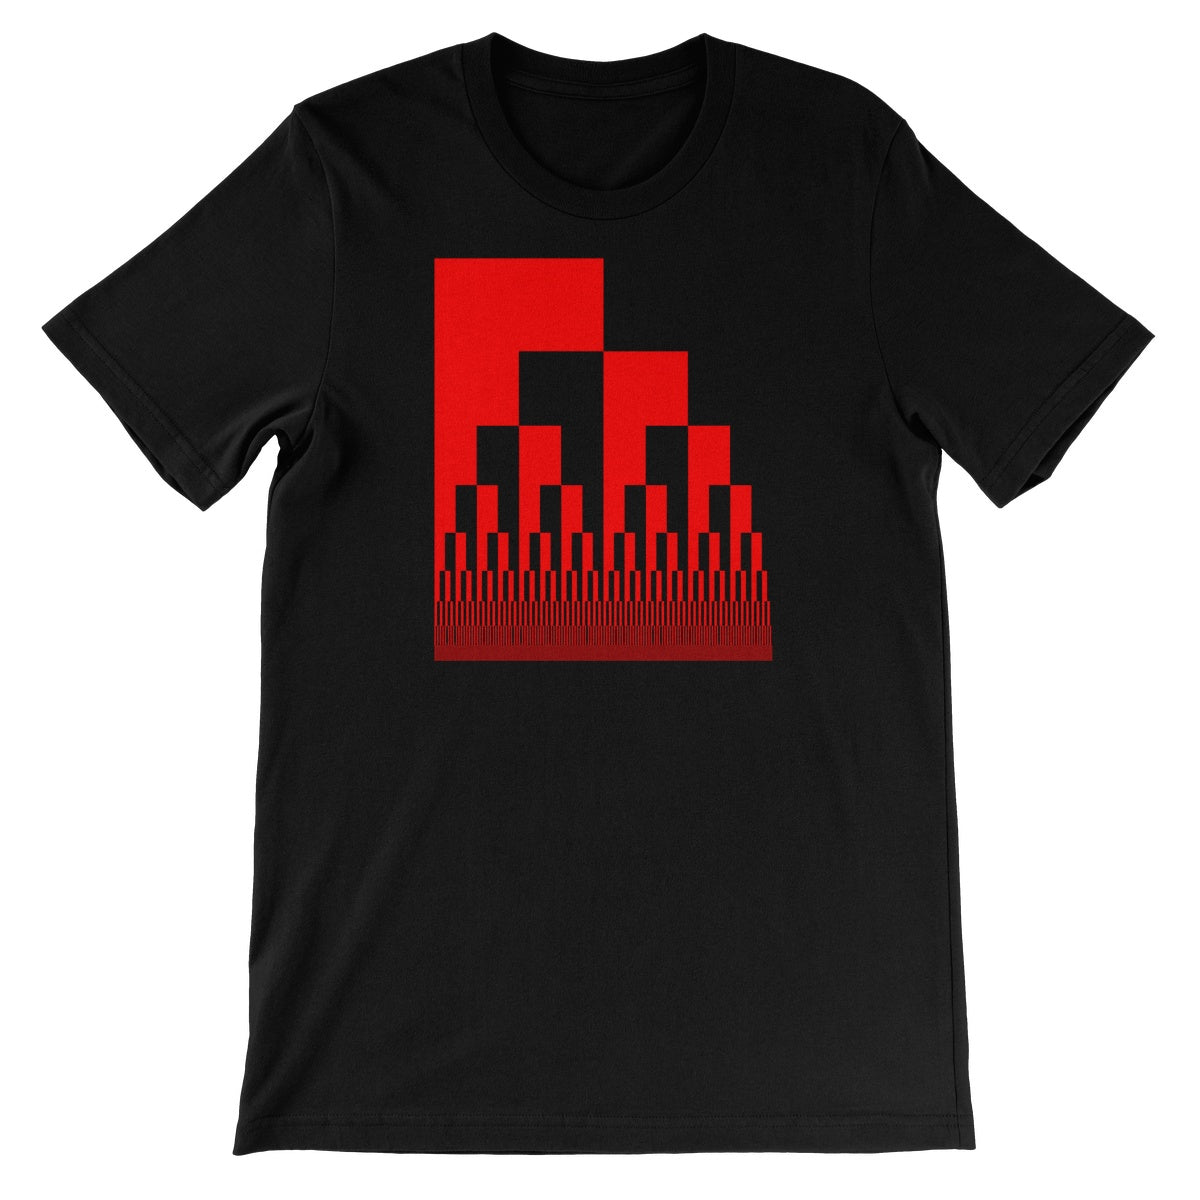 A black unisex T-shirt with a binary-recursive red rectangular design